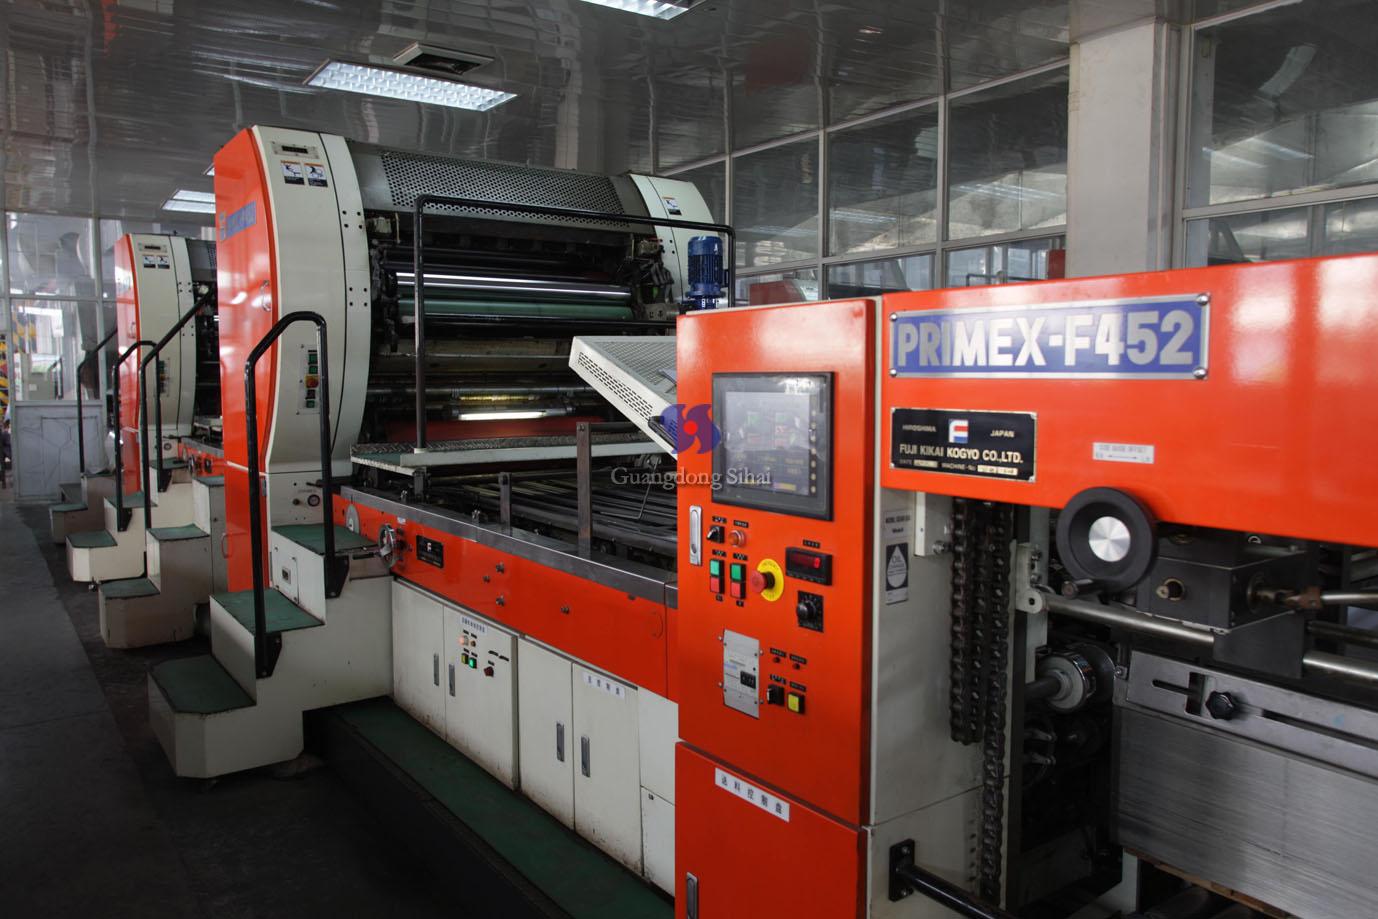 Fuji printing machine